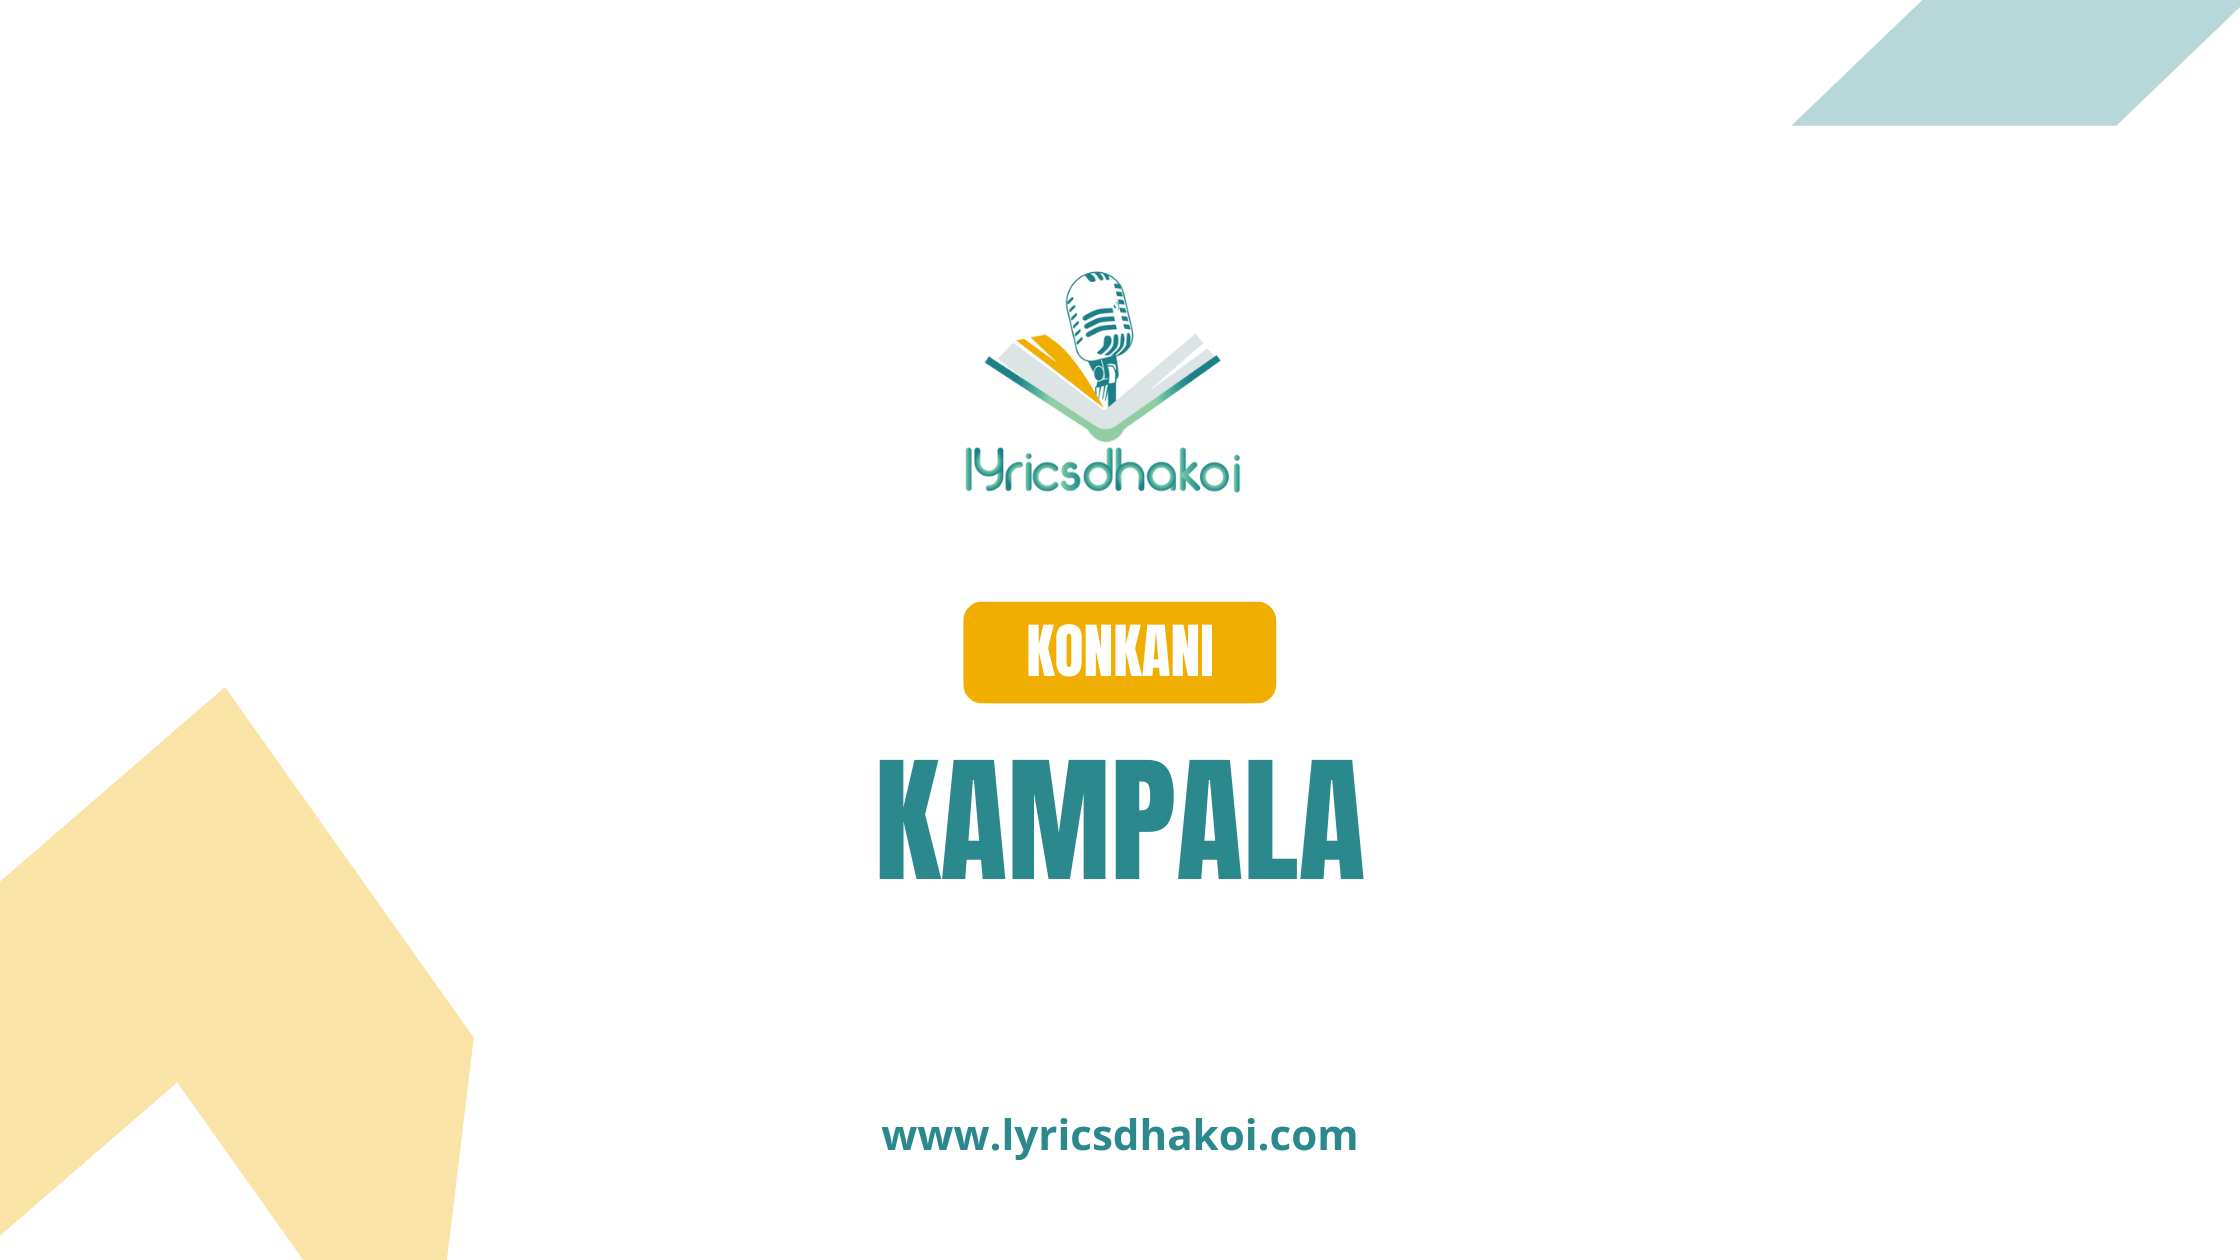 Kampala Konkani Lyrics for Karaoke Online - LyricsDhakoi.com